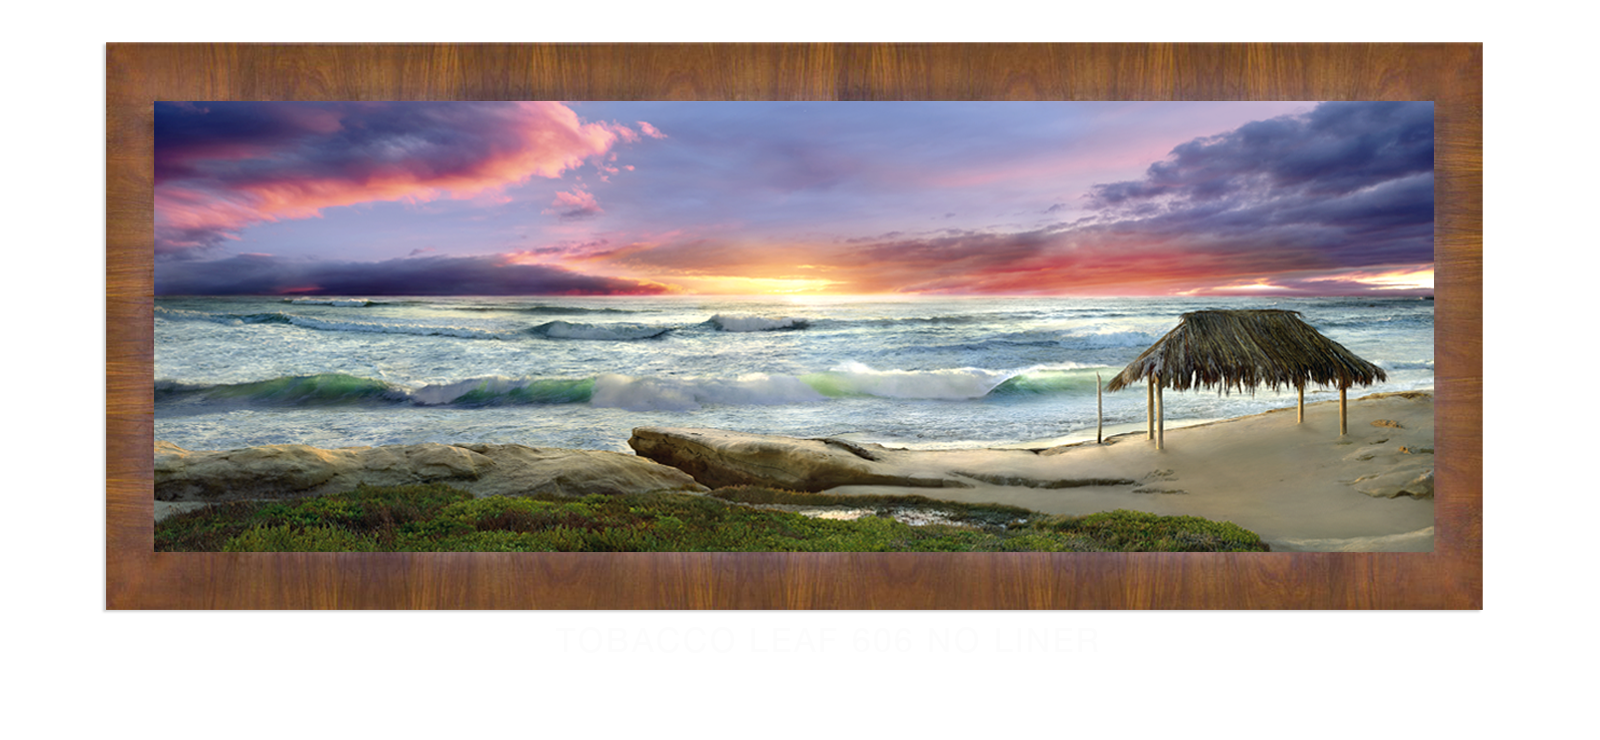 25AWAITANCE Tobacco Leaf 606 w_No Liner T